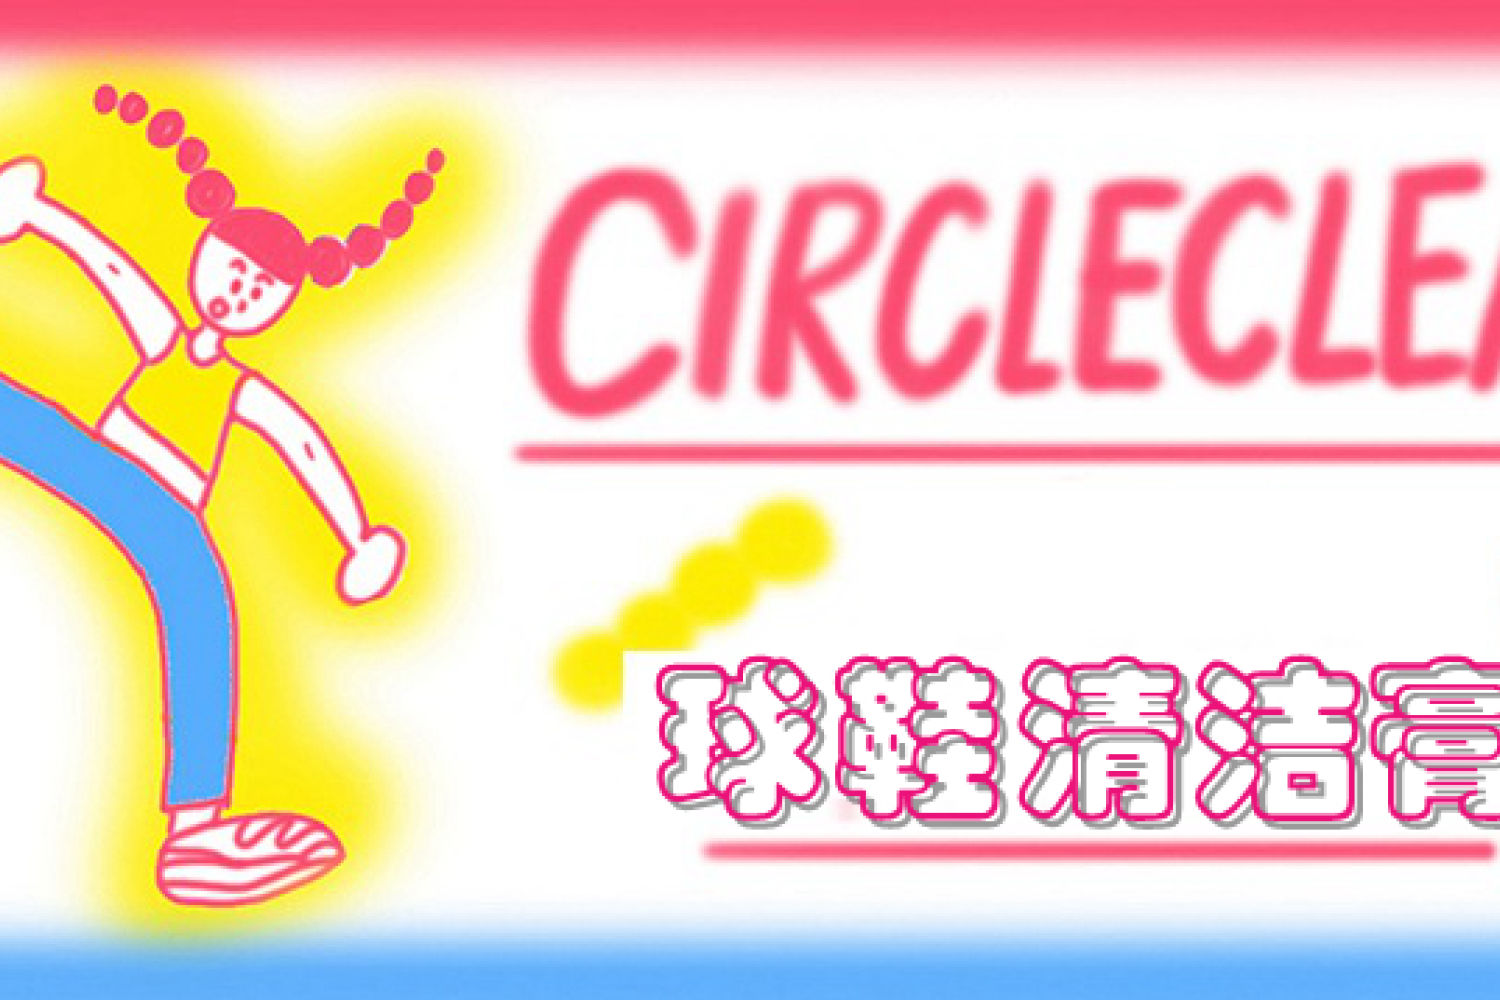 Circleclean——随时为鞋子“美白补妆”